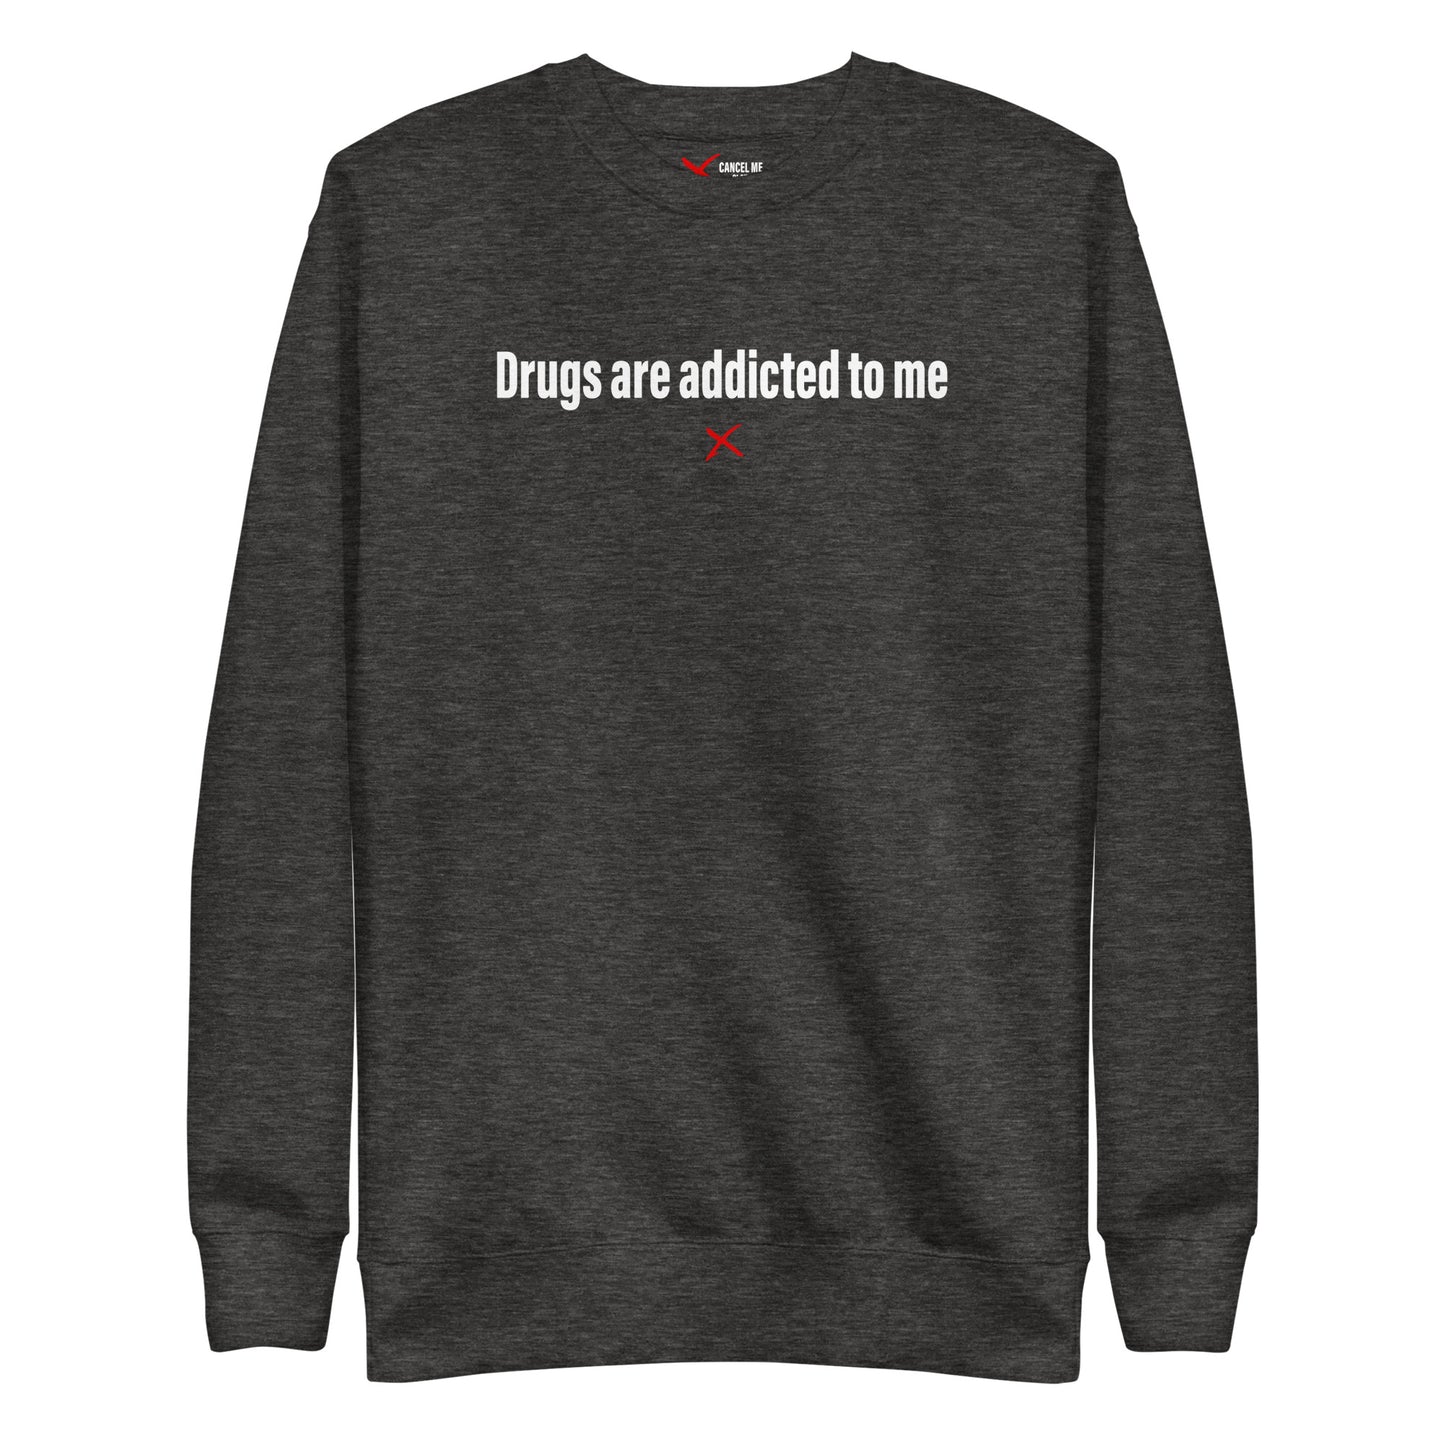 Drugs are addicted to me - Sweatshirt